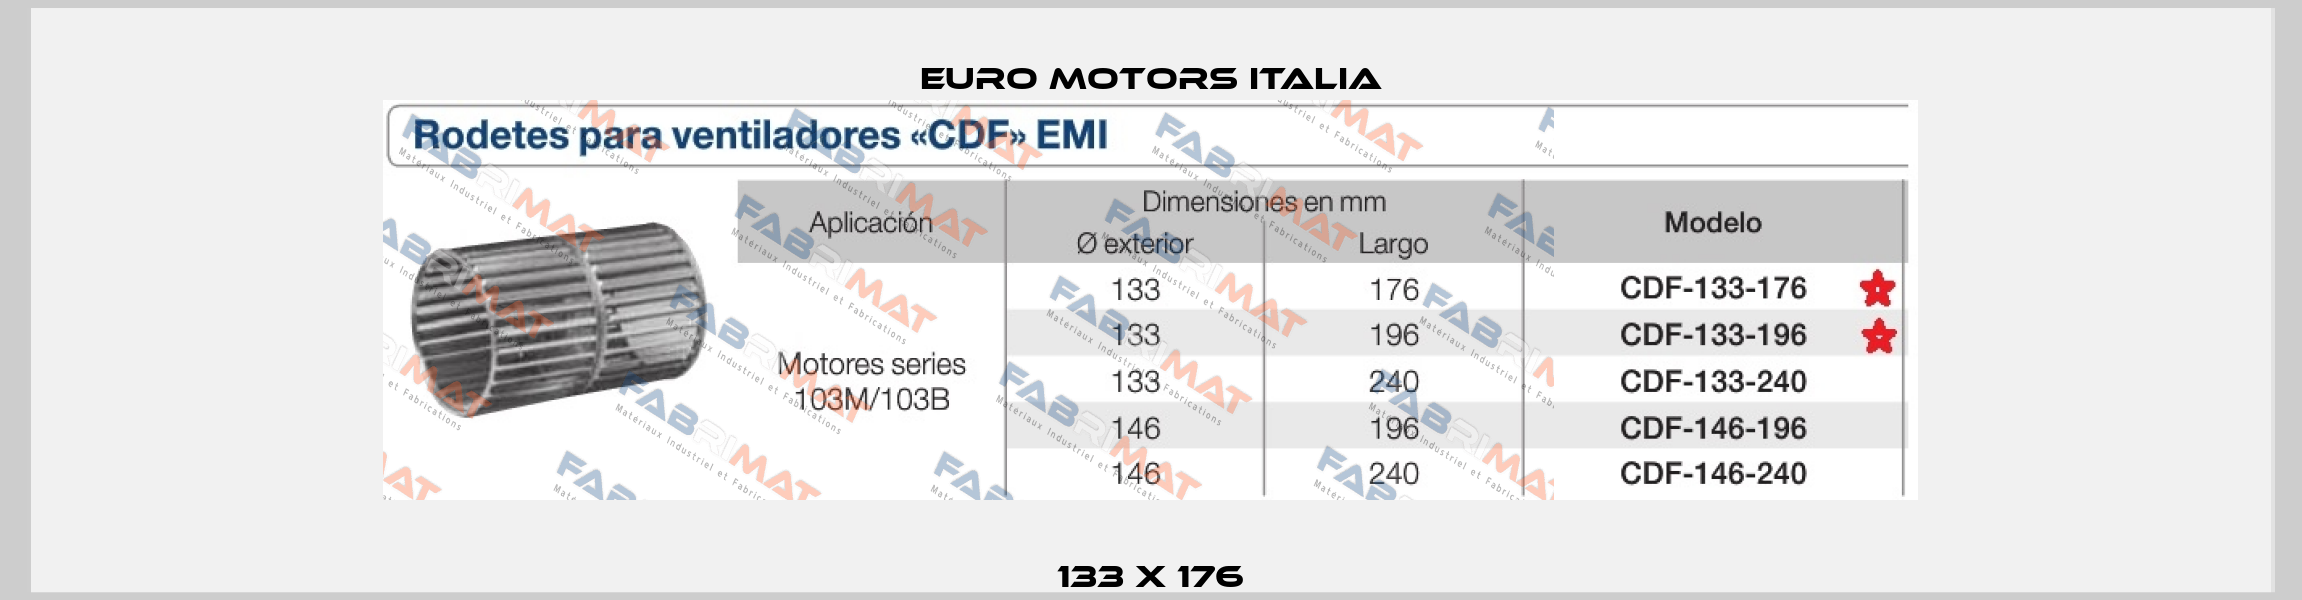 133 X 176 Euro Motors Italia